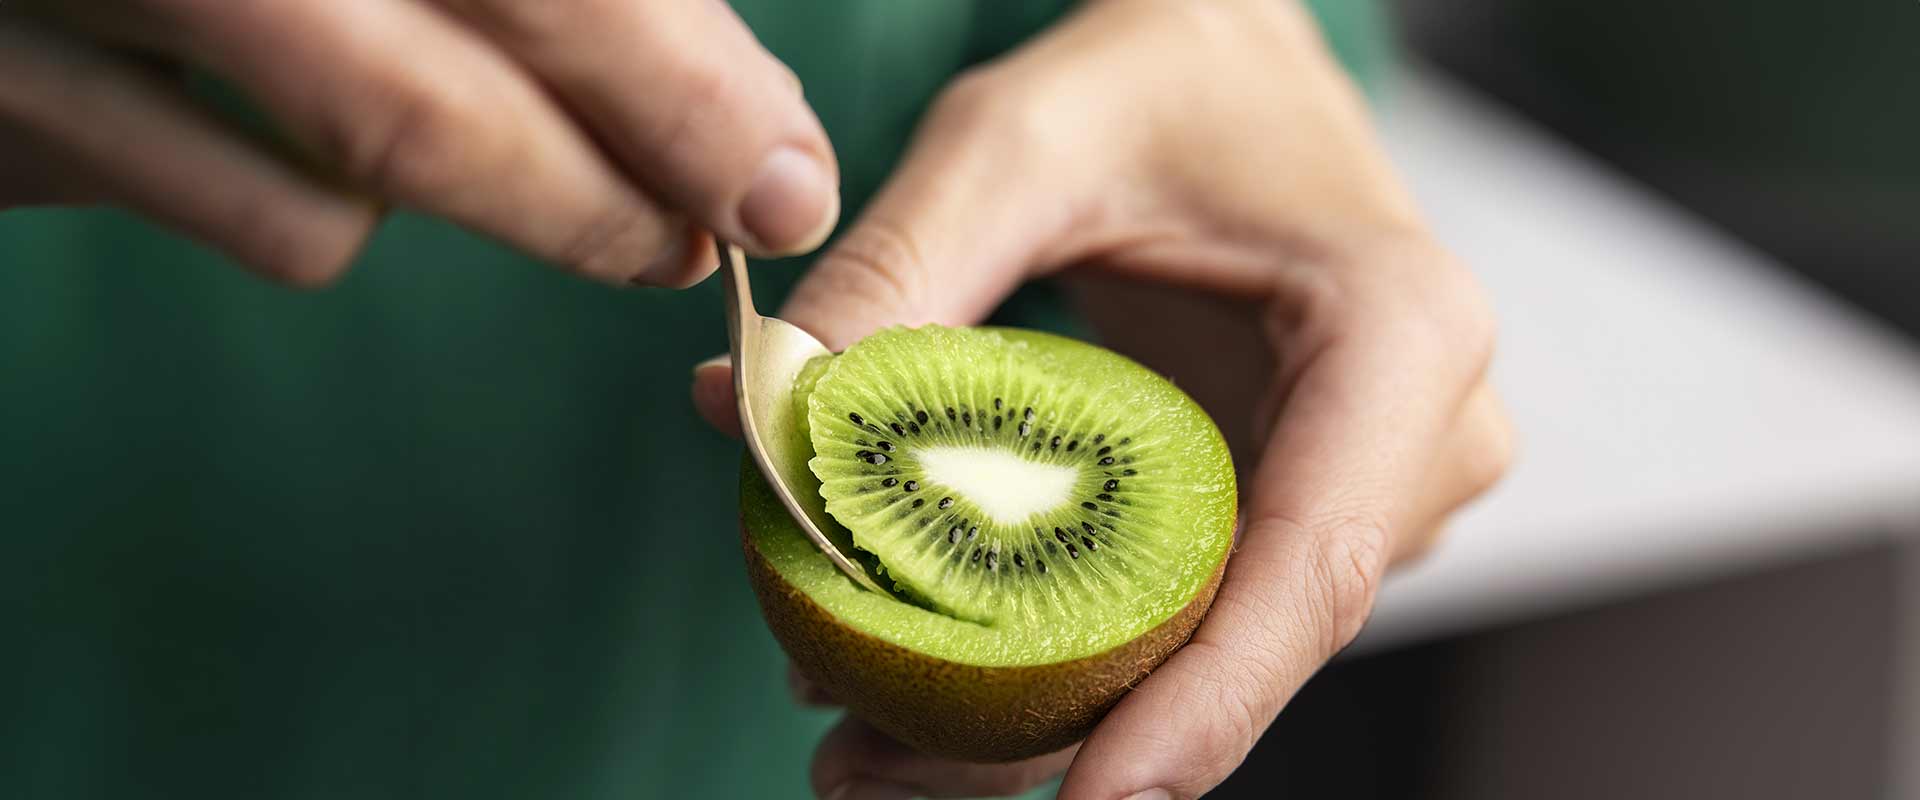 Kiwifruit: a Natural Alternative to Laxatives - Heather